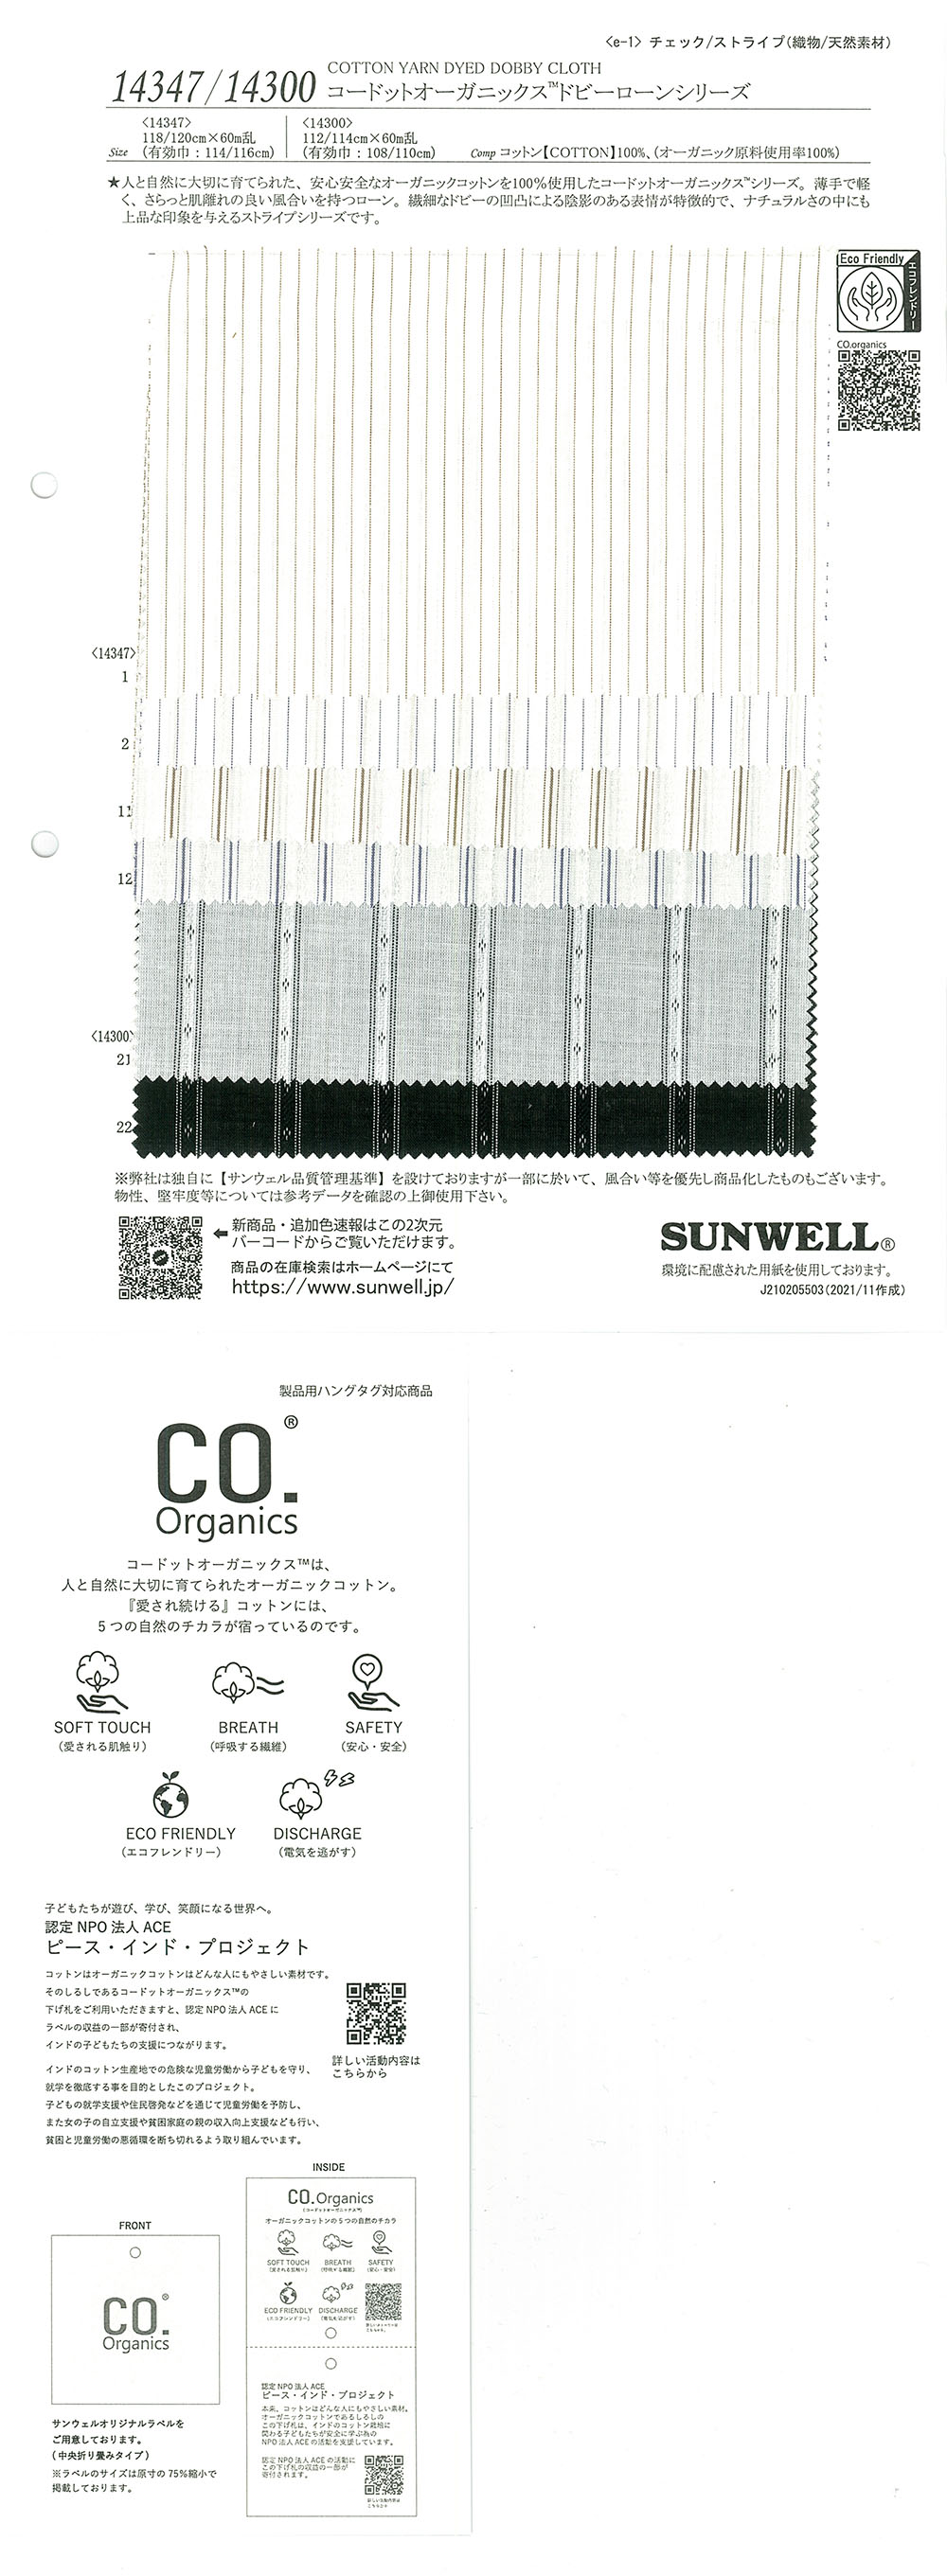 14300 Cordot Organics (R) Dobby Lawn Series[Textile / Fabric] SUNWELL